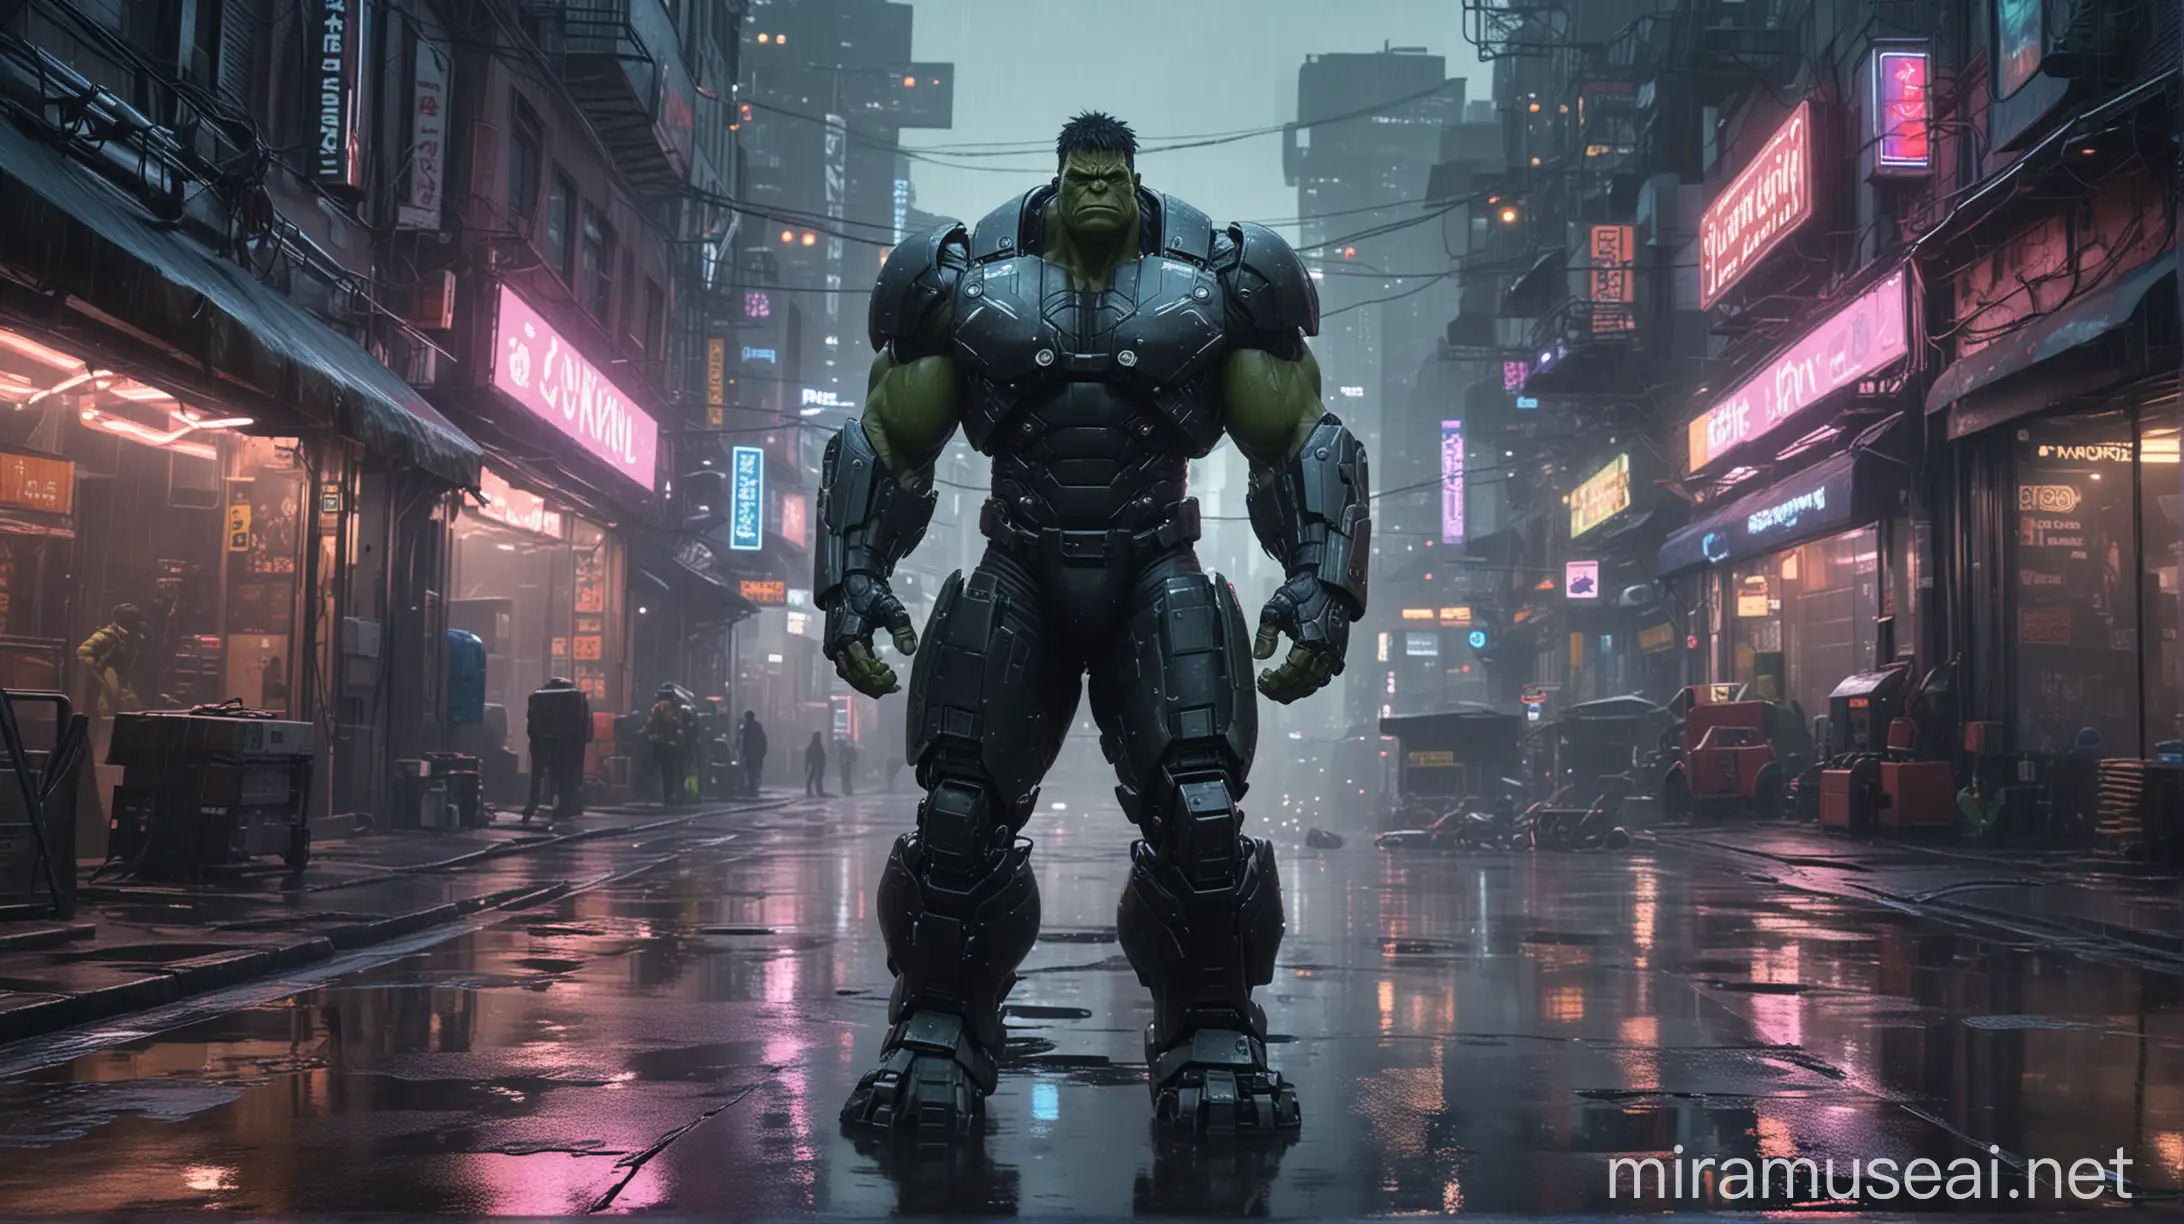 Futuristic Cyberpunk Hulk Mech Ready for Battle in Rainy Neon City